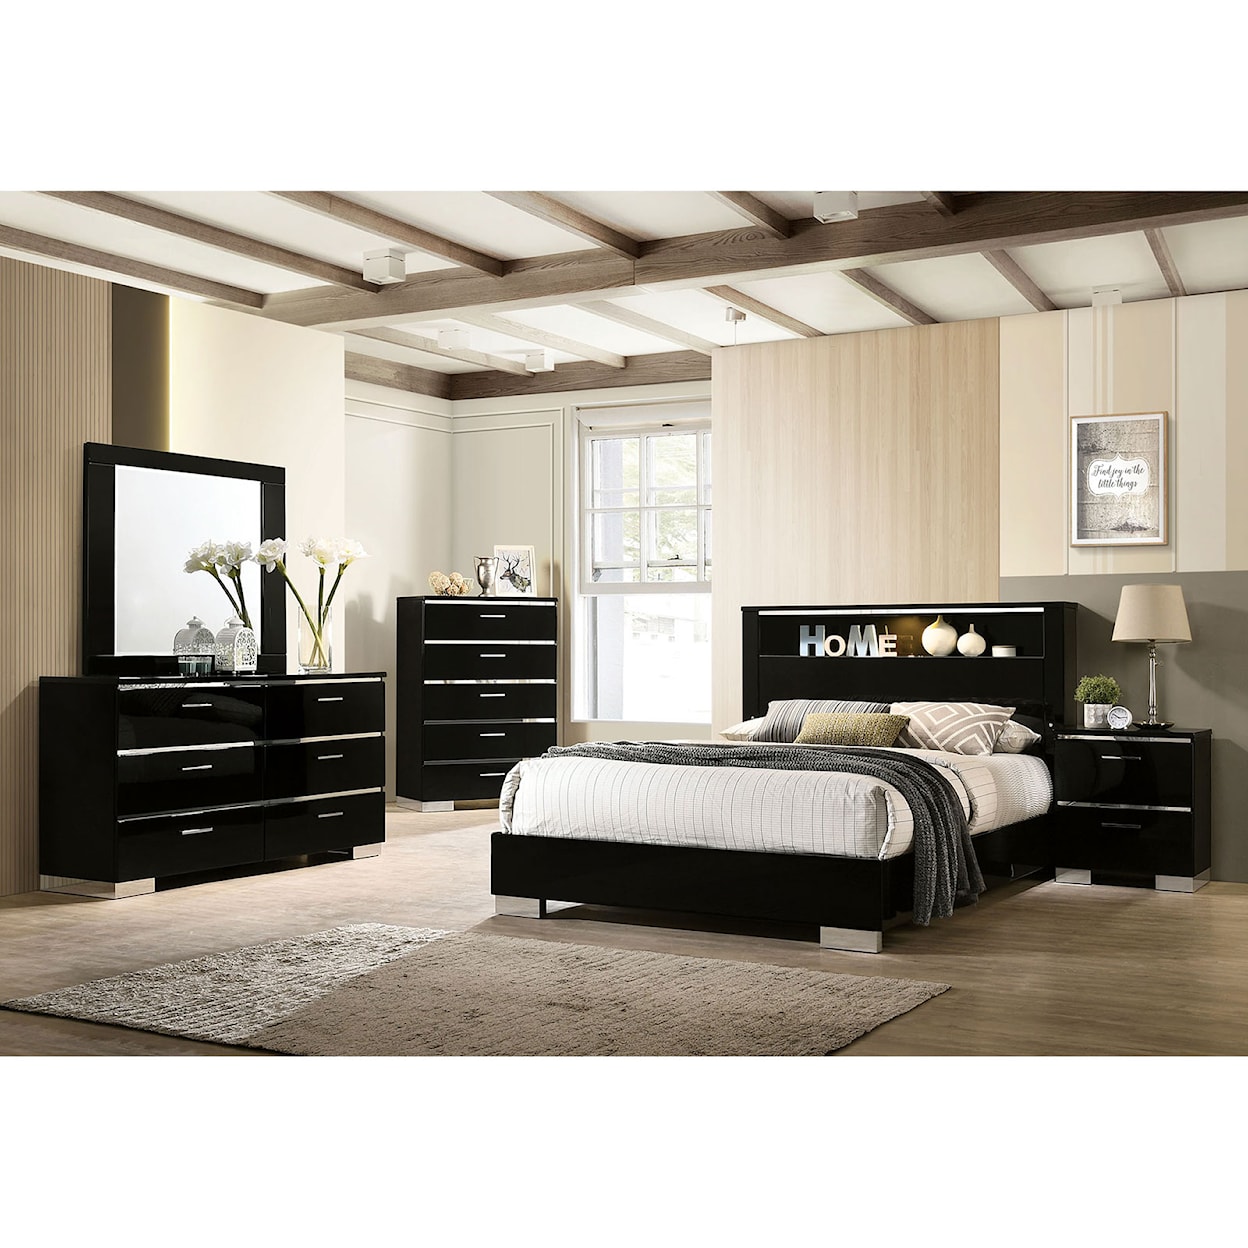 Furniture of America Carlie Queen Bedroom Group